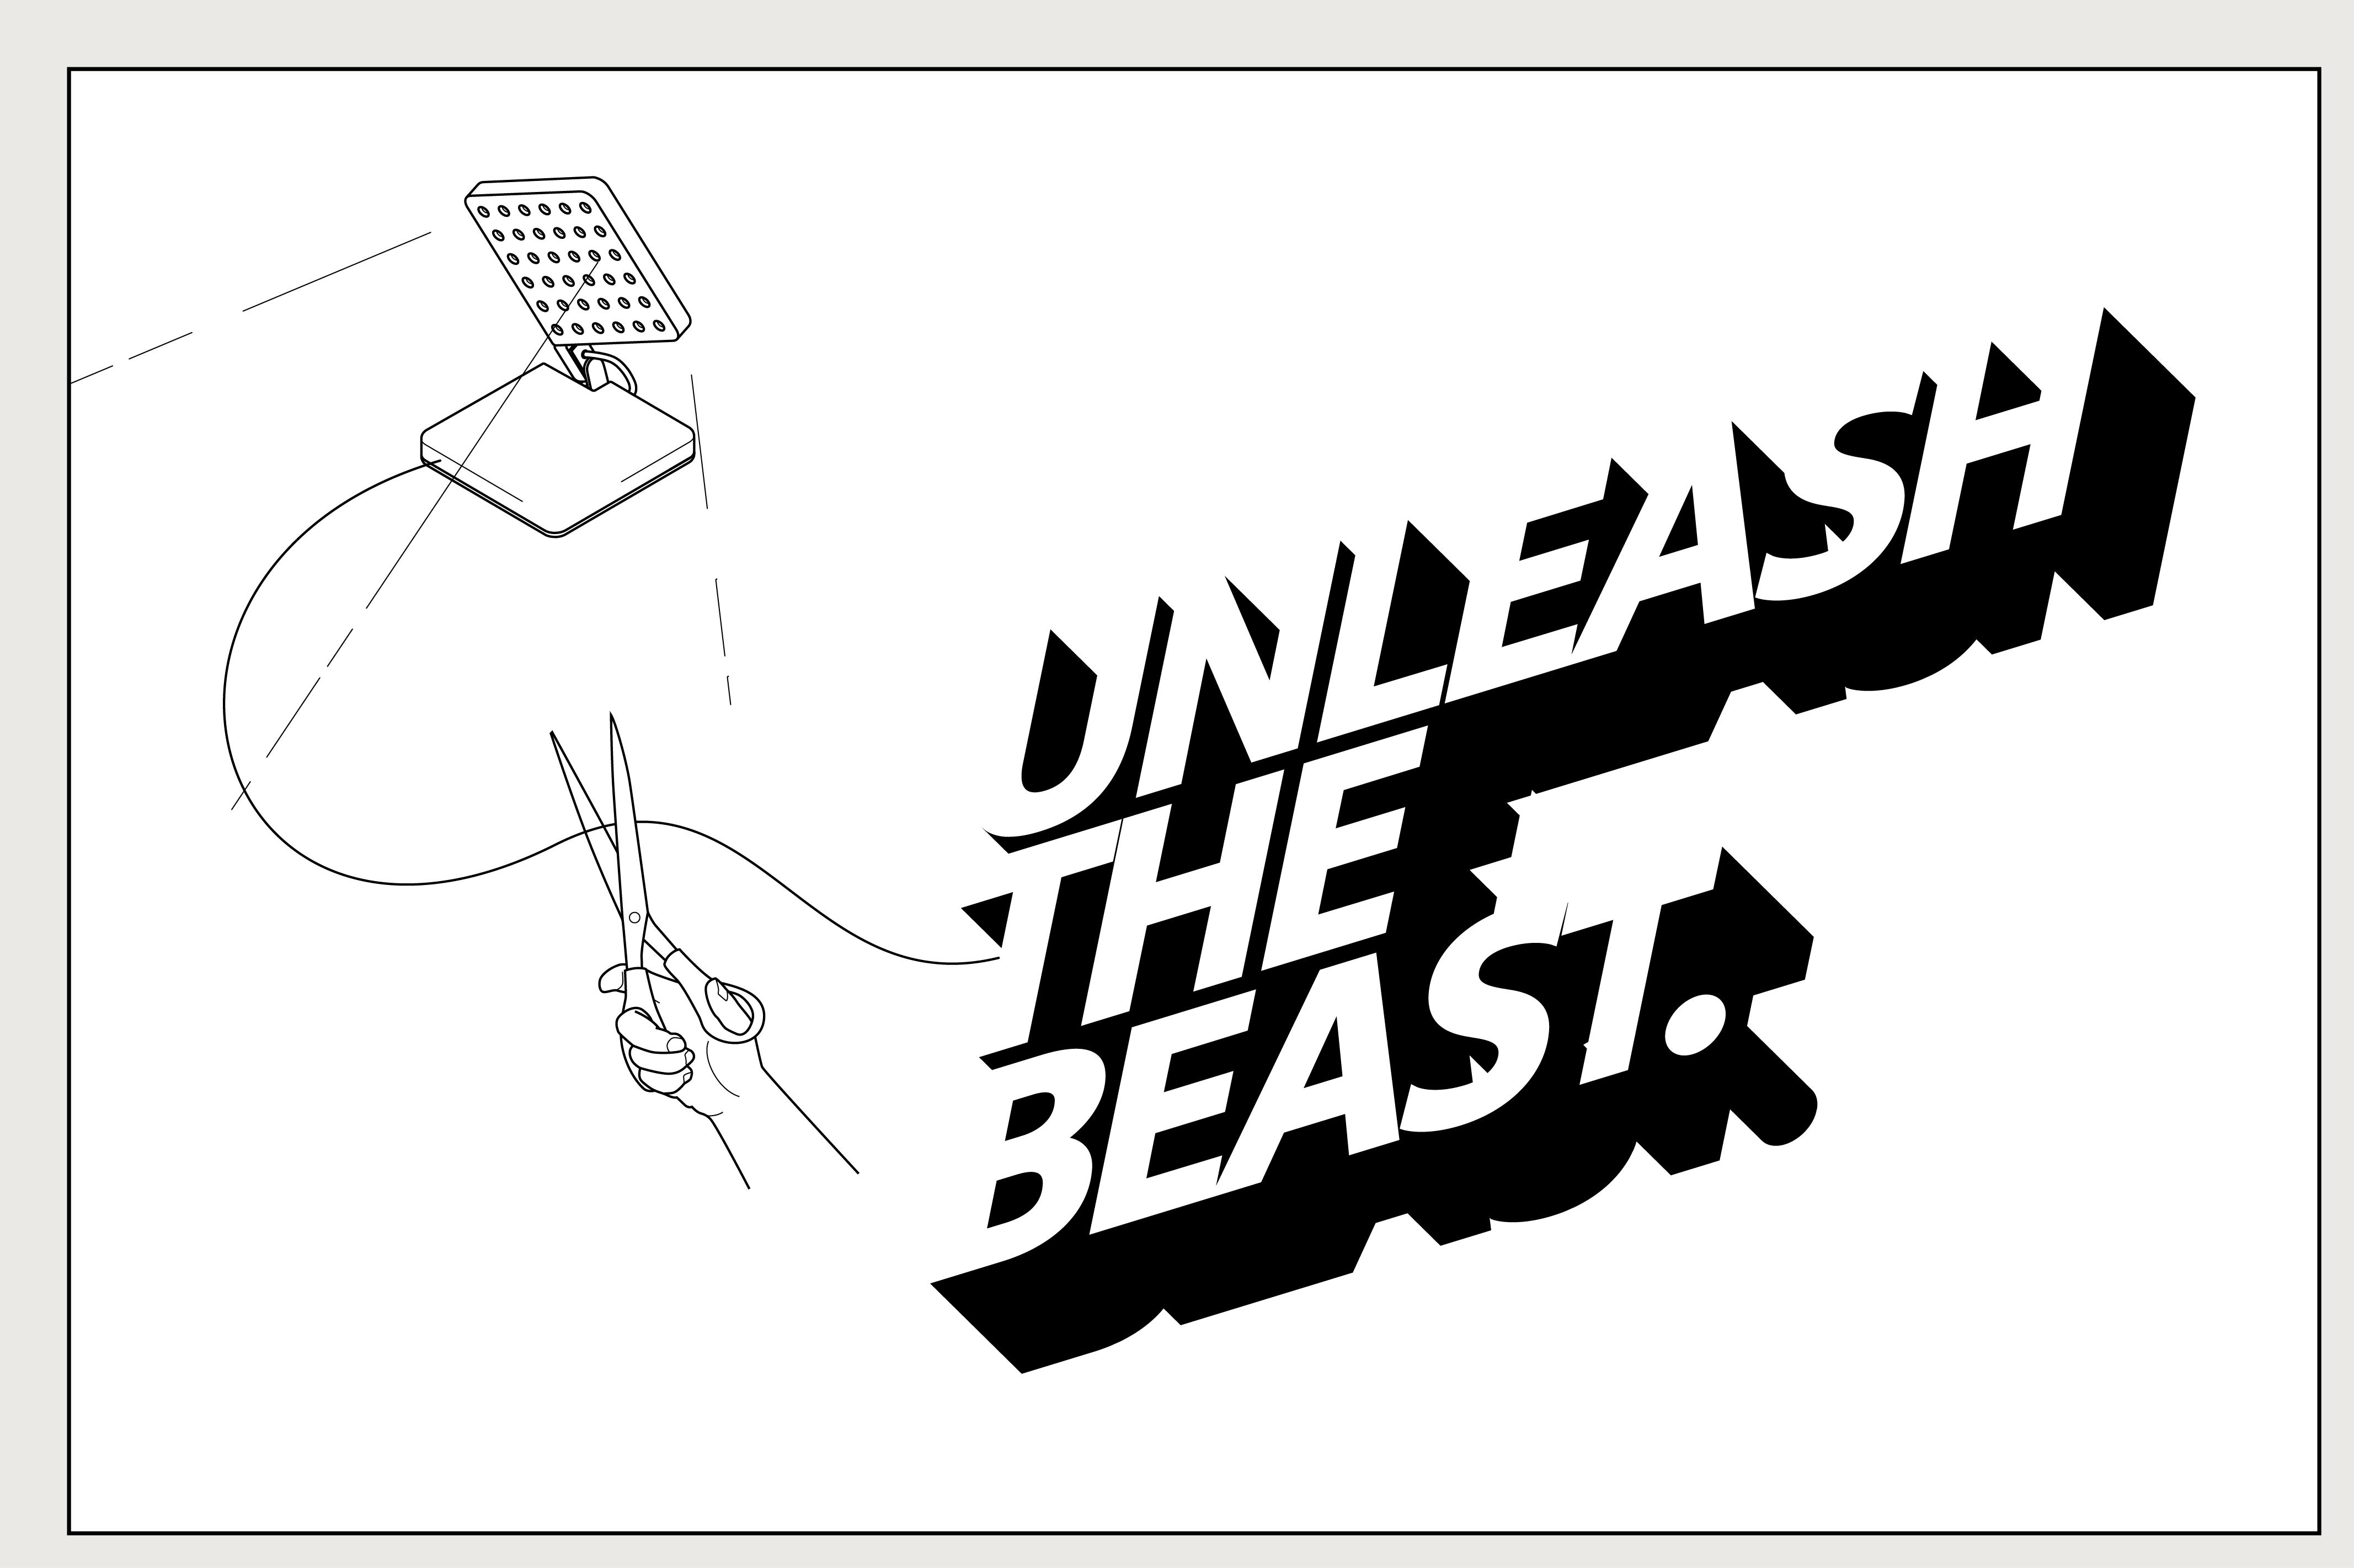 unleash the beast